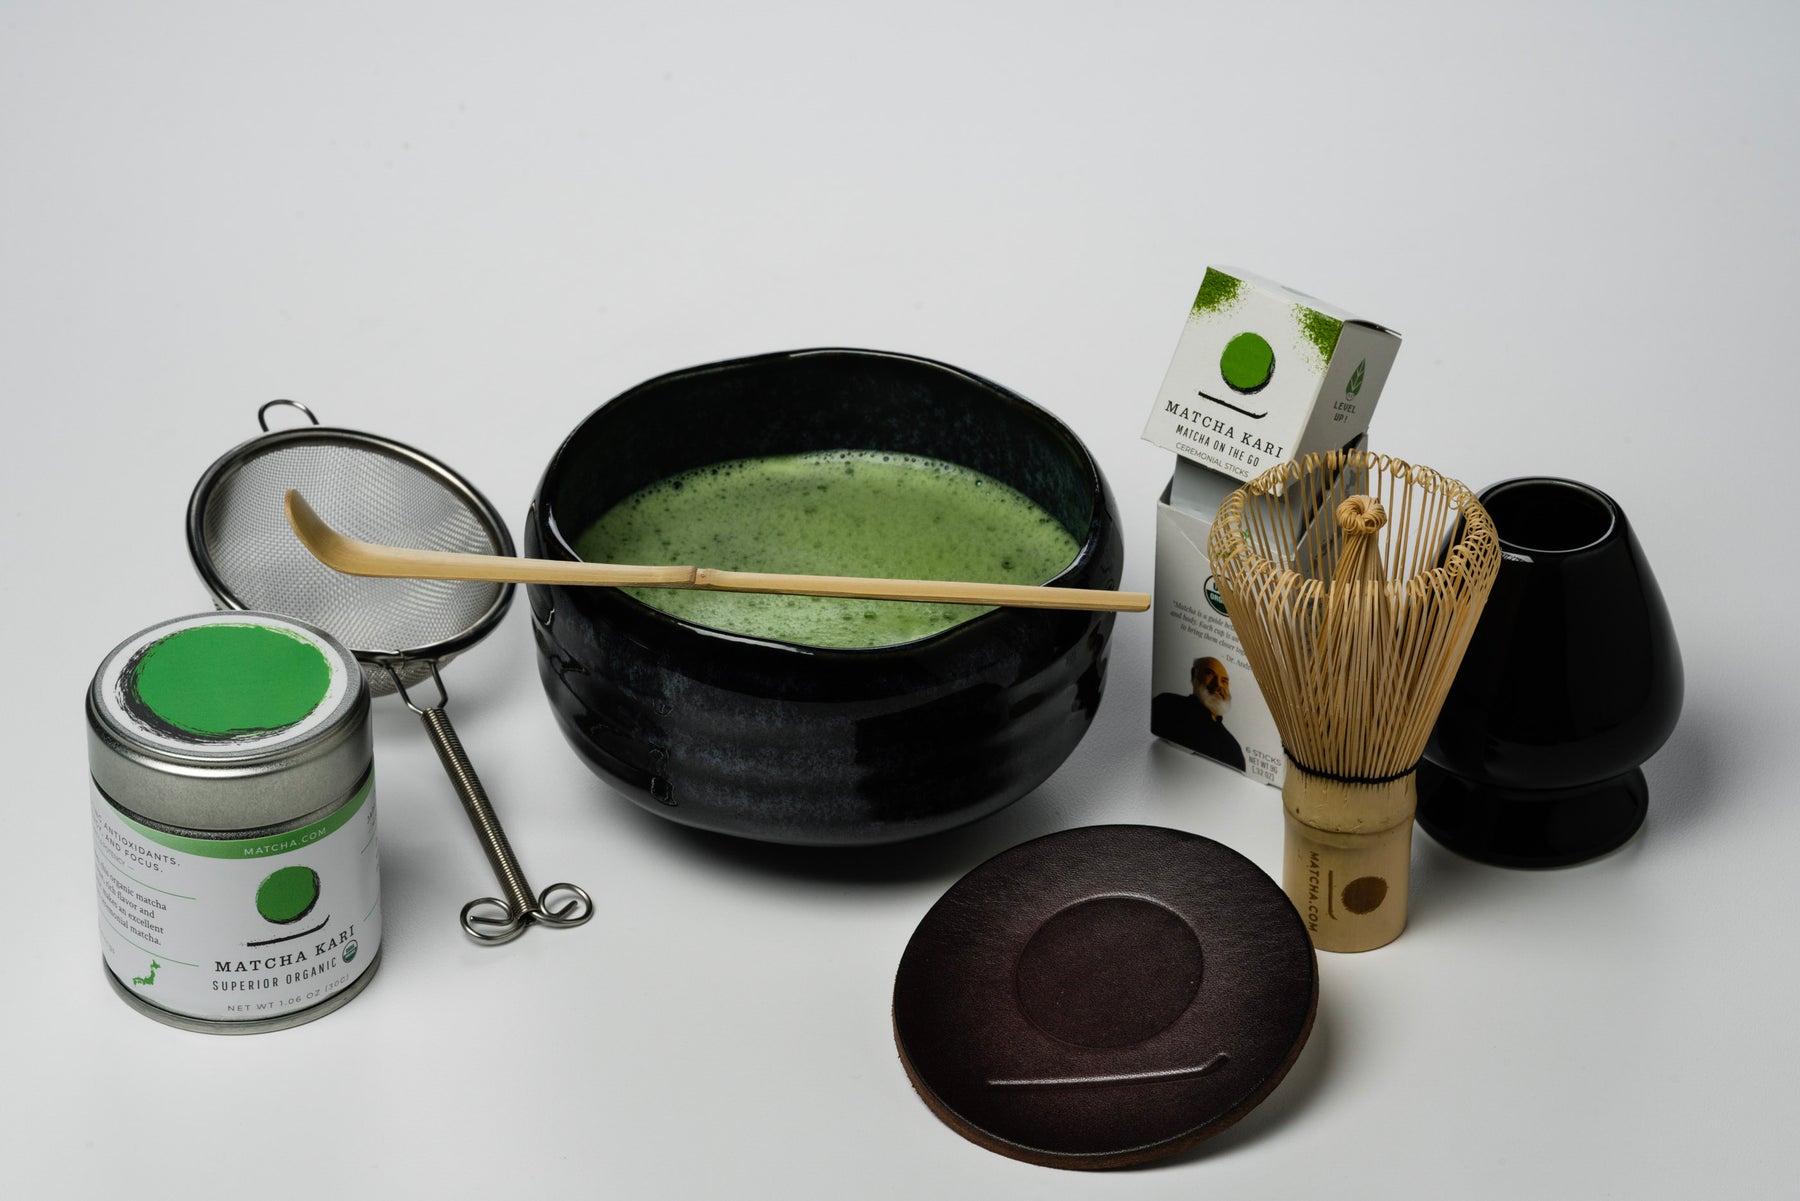 Ultimate Iced Tea Kit Organic Matcha Fresca by Art of Tea